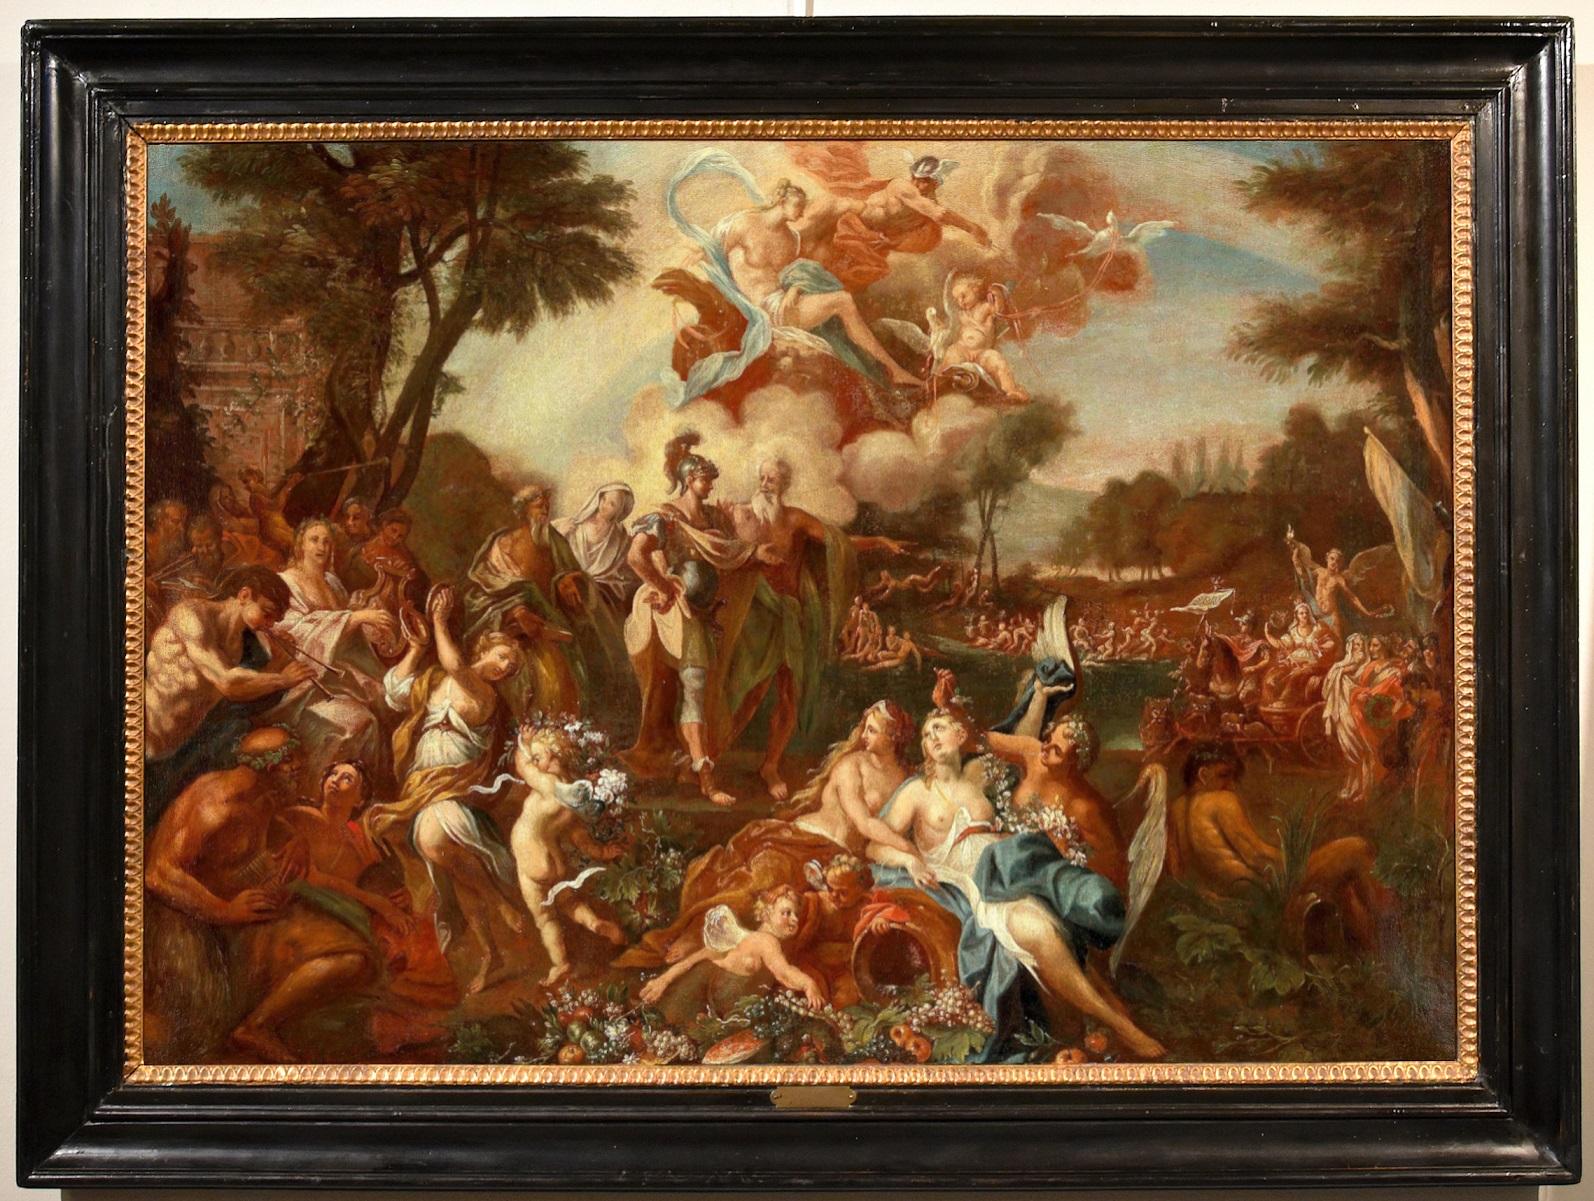 Aeneas Champs Elysées Conca Paint Oil on canvas Old master 18th Century Italian